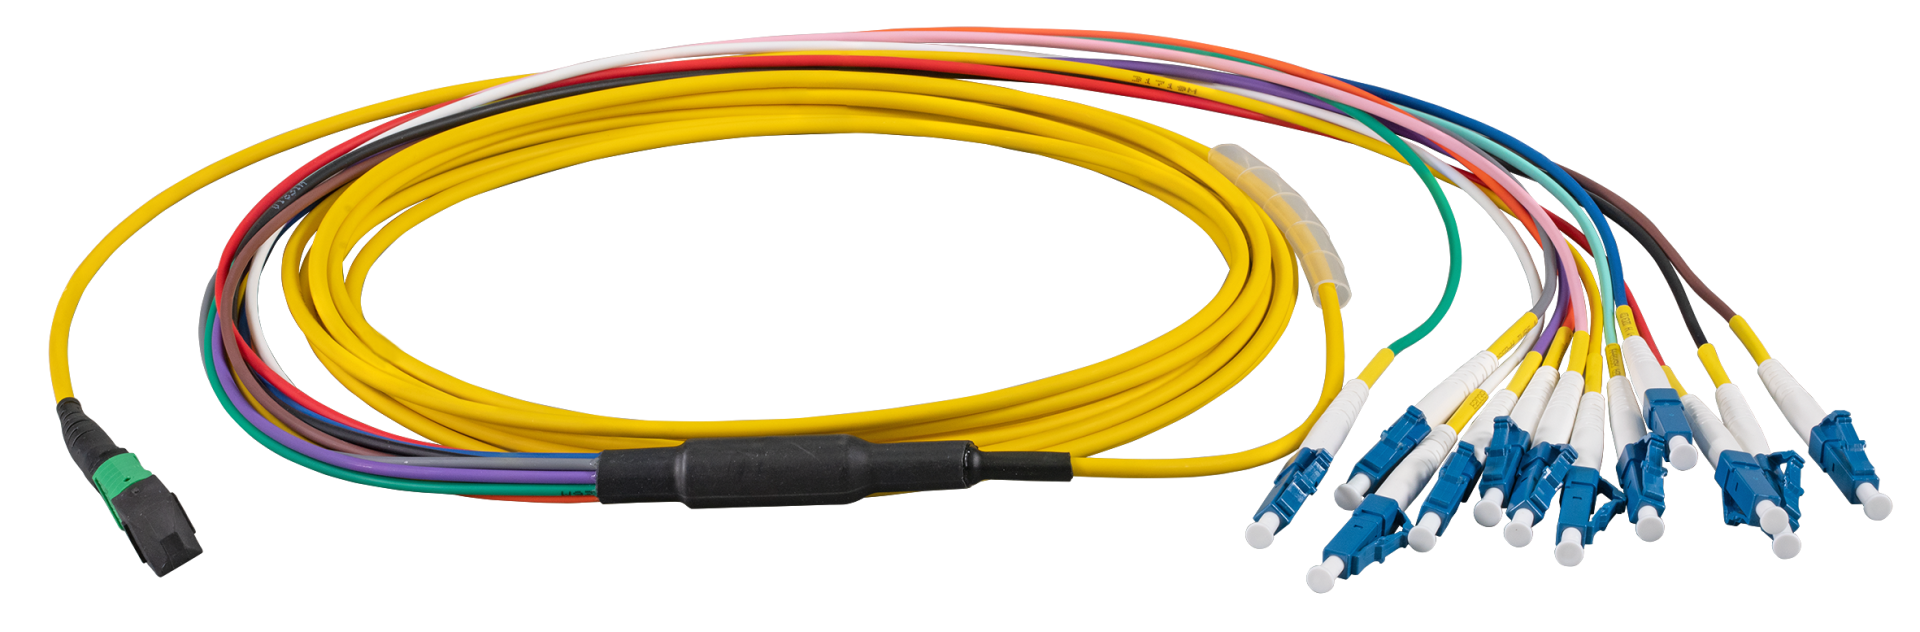 MTP®-F/LC/APC 12-fiber patch cable OS2, LSZH yellow, 2m